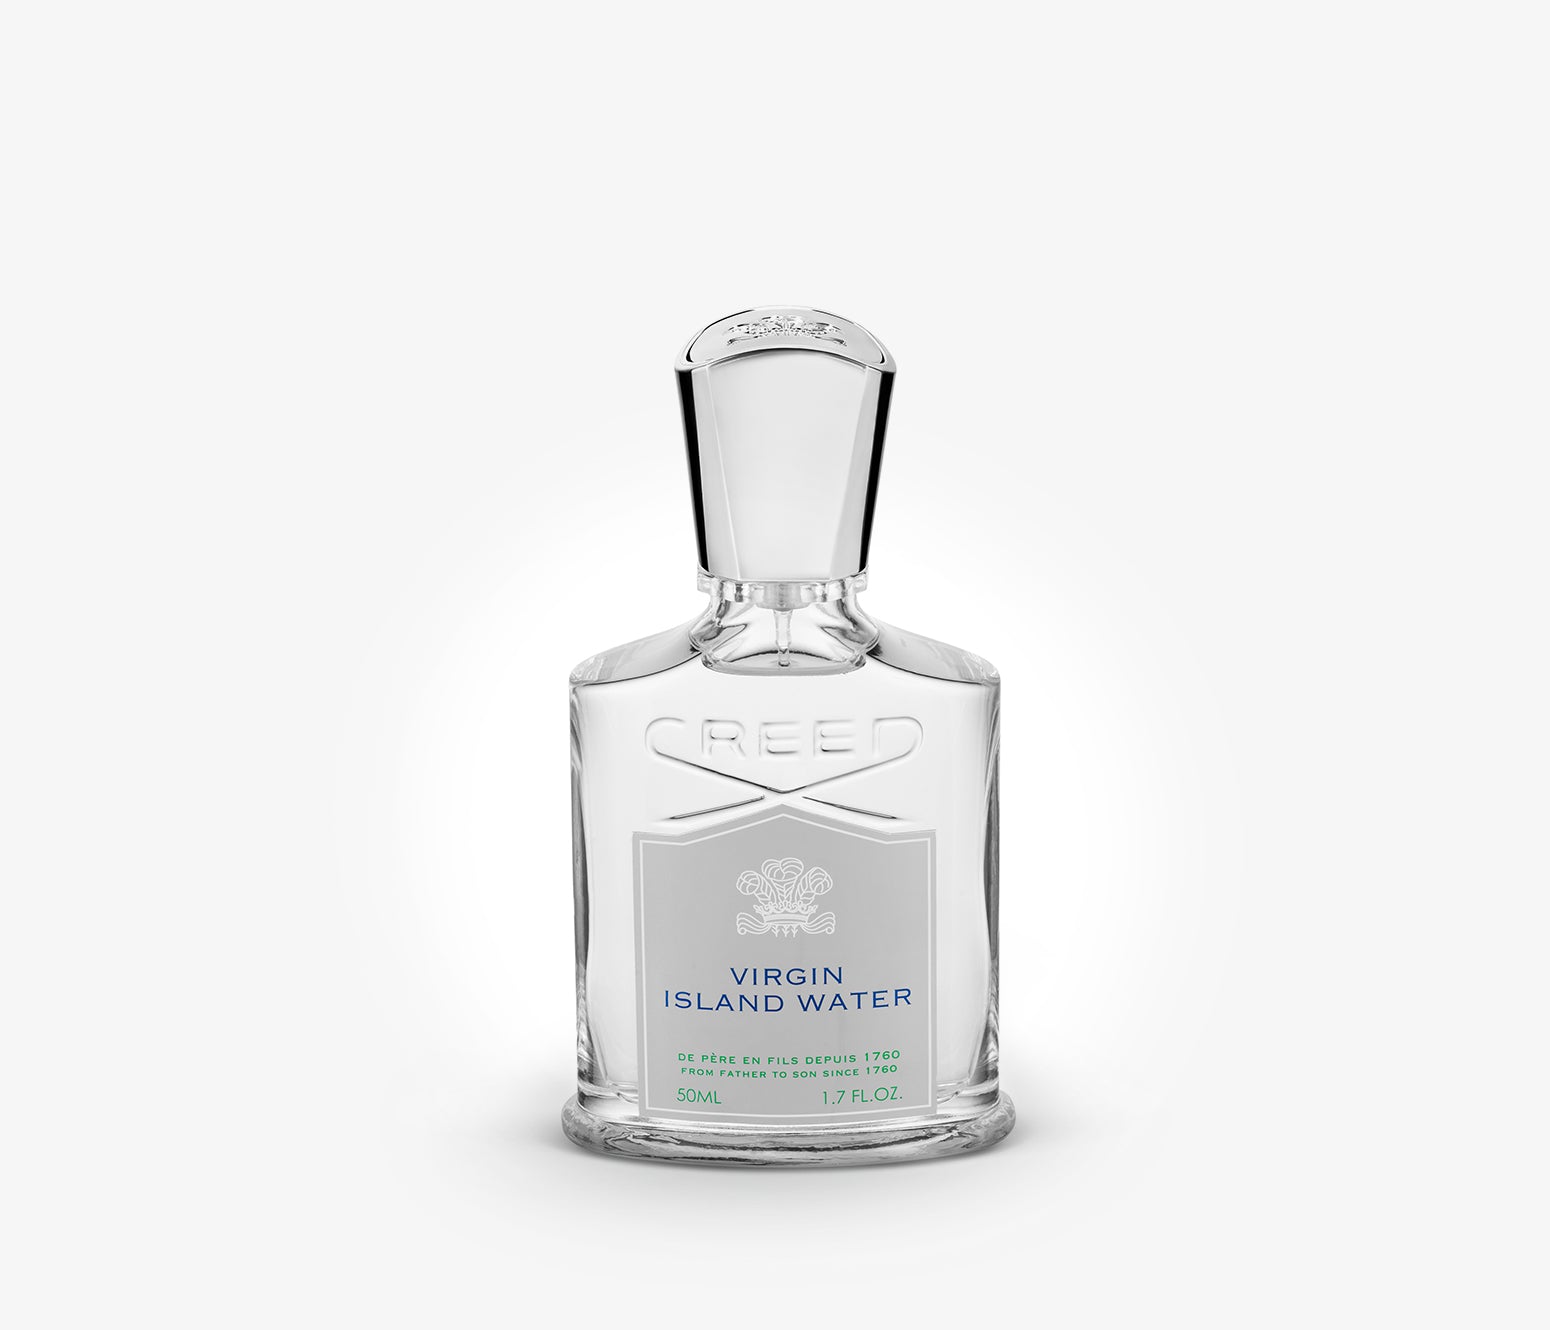 Creed - Virgin Island Water - 50ml - SXJ004 - Product Image - Fragrance - Les Senteurs